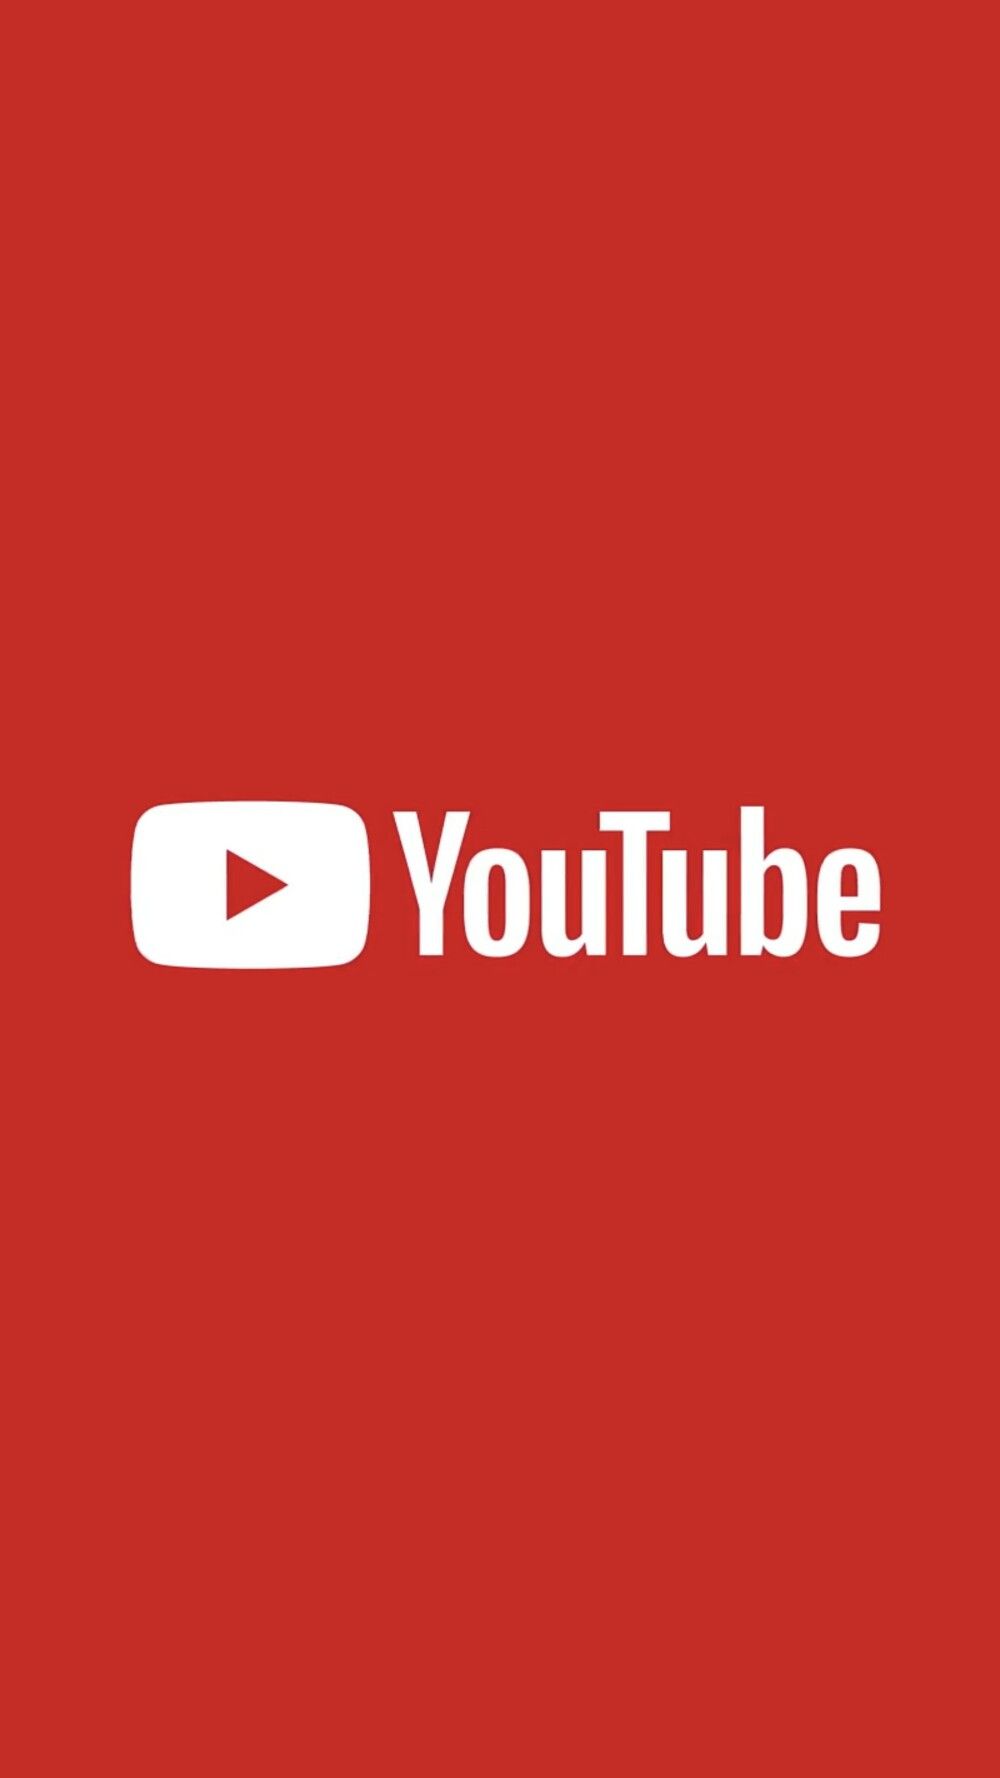 Flat YouTube Logo Wallpaper. Youtube logo, Red colour wallpaper, Logos